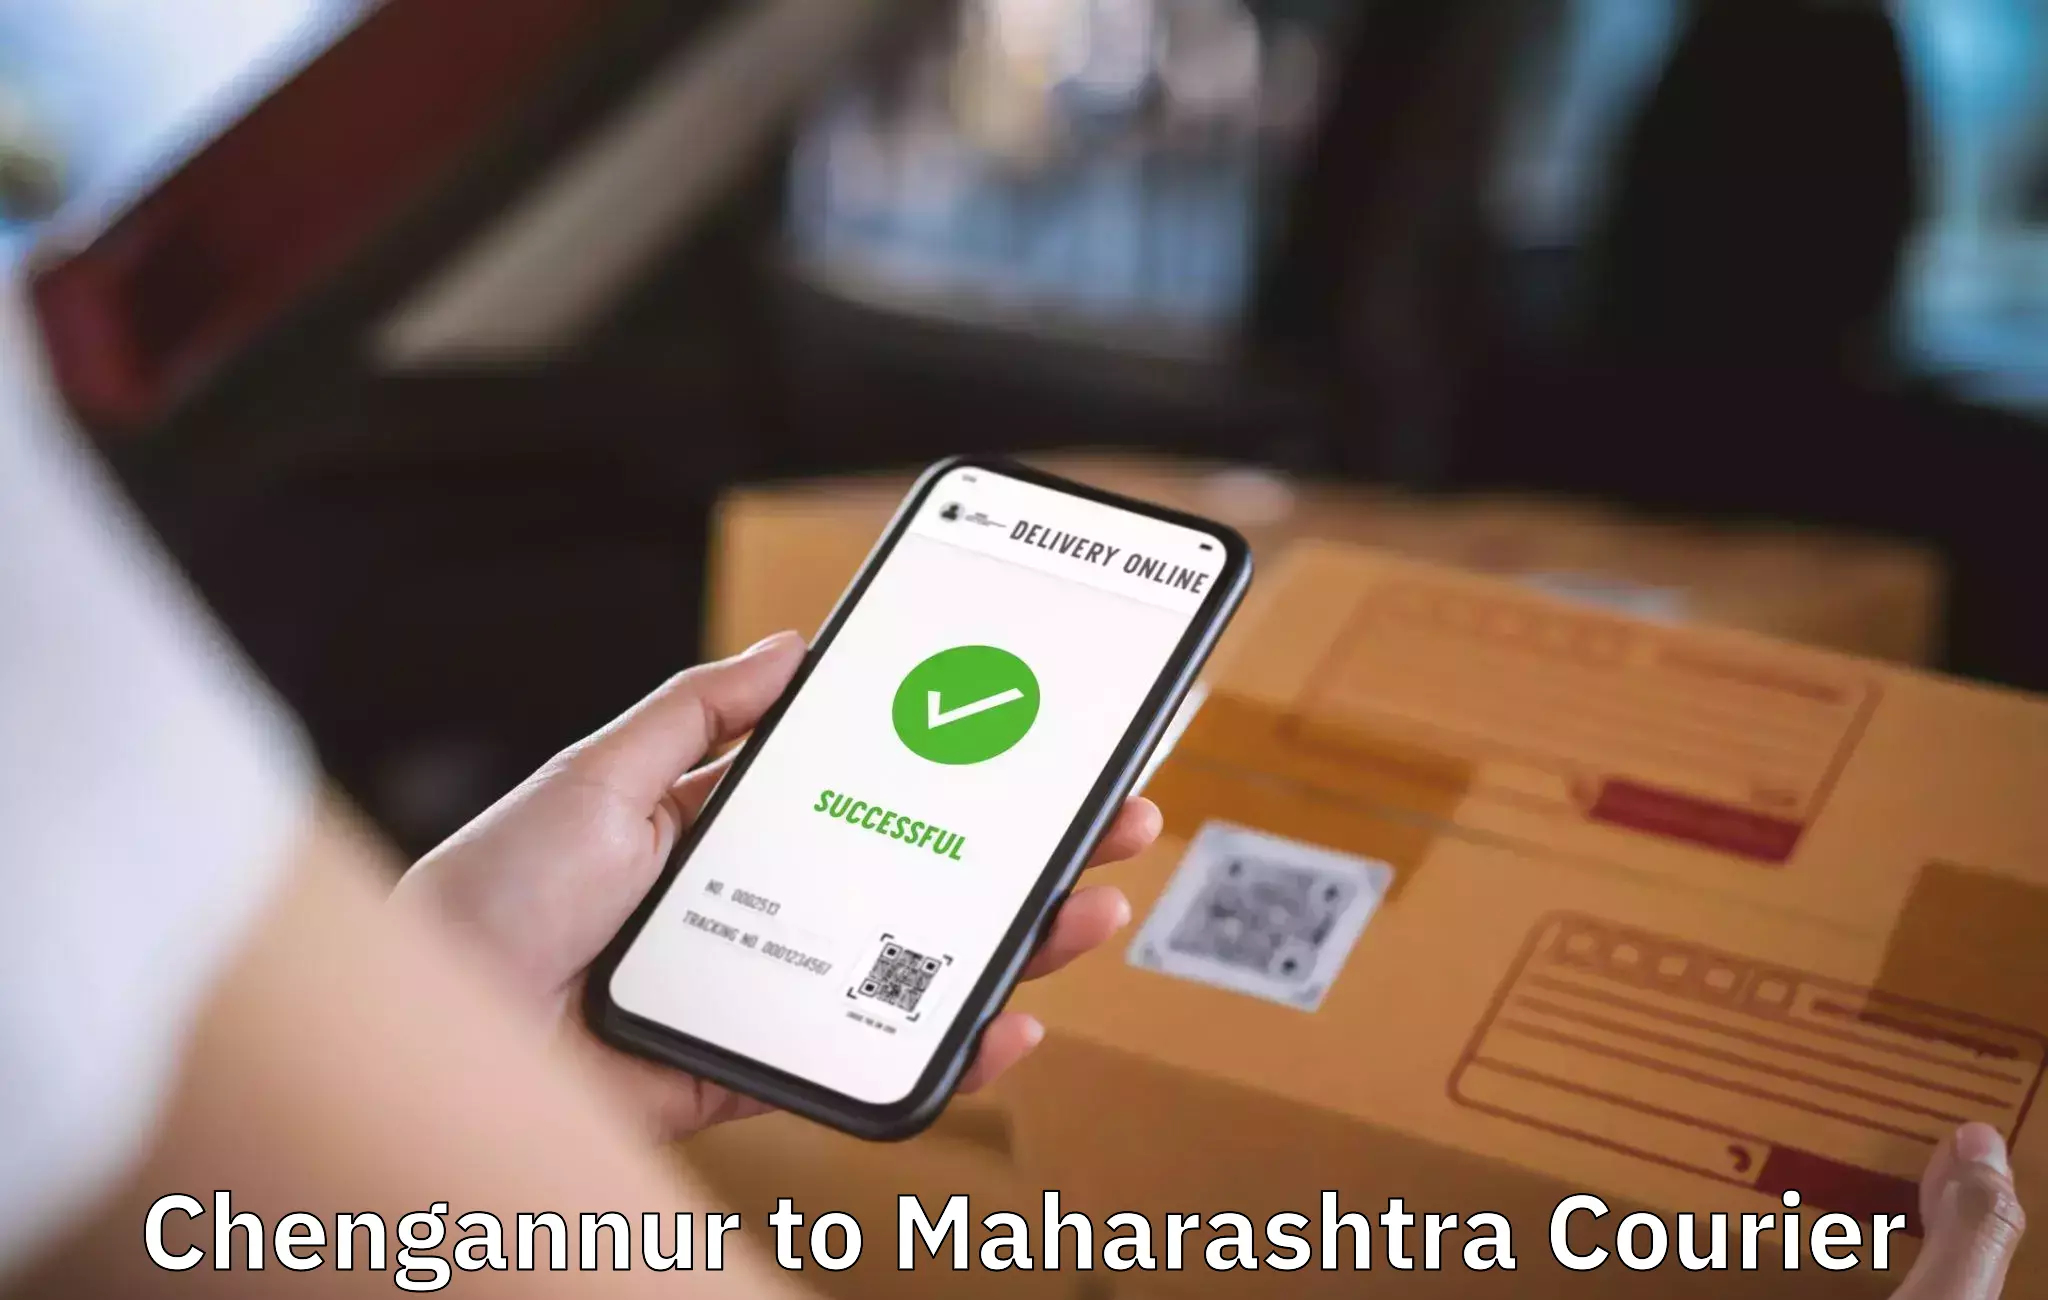 Professional moving company Chengannur to Maharashtra